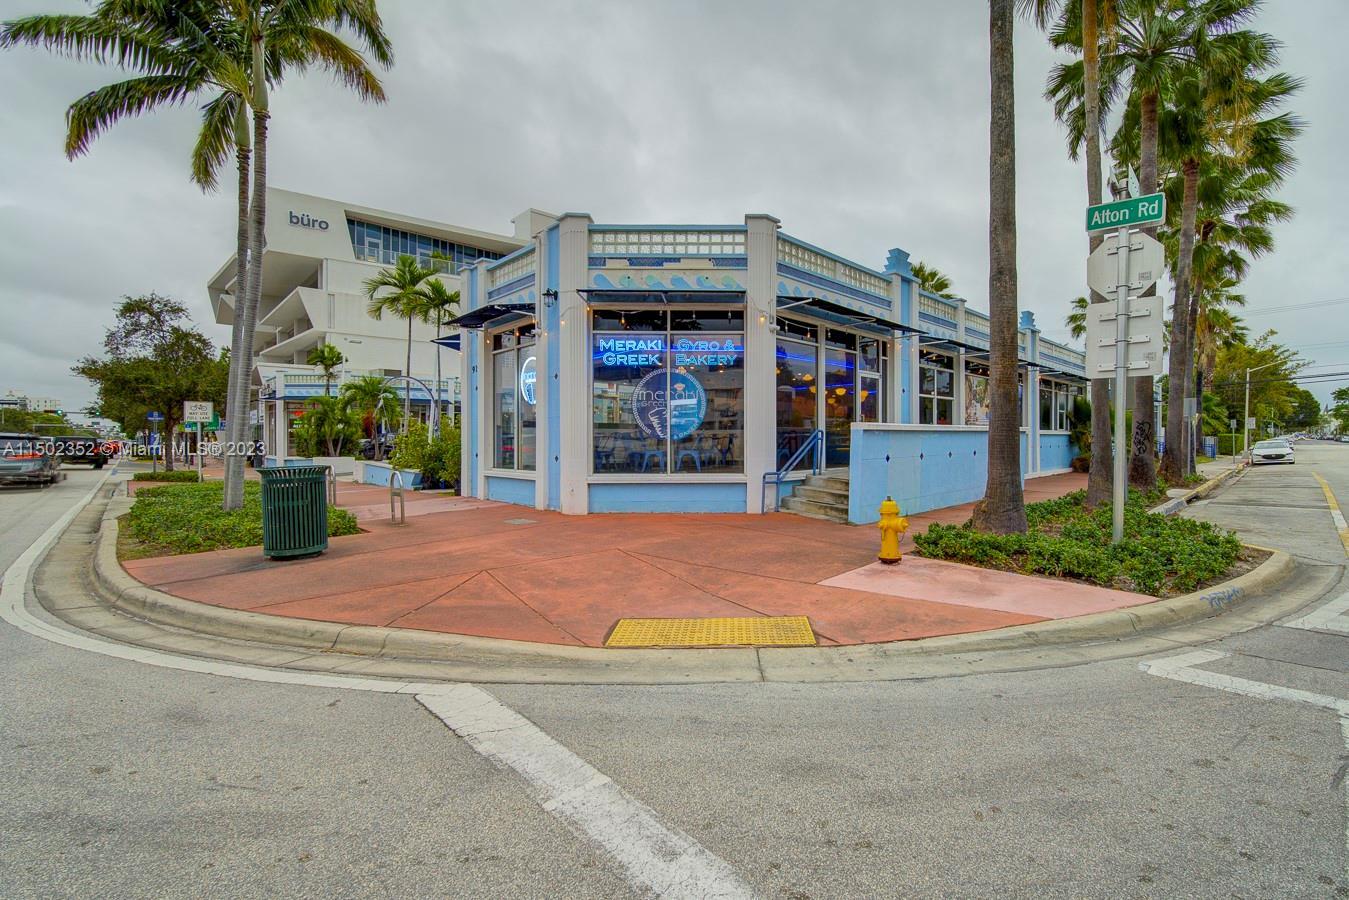 Photo of Free-Standing Restaurant For Sale In Miami Bch in Miami Beach, FL